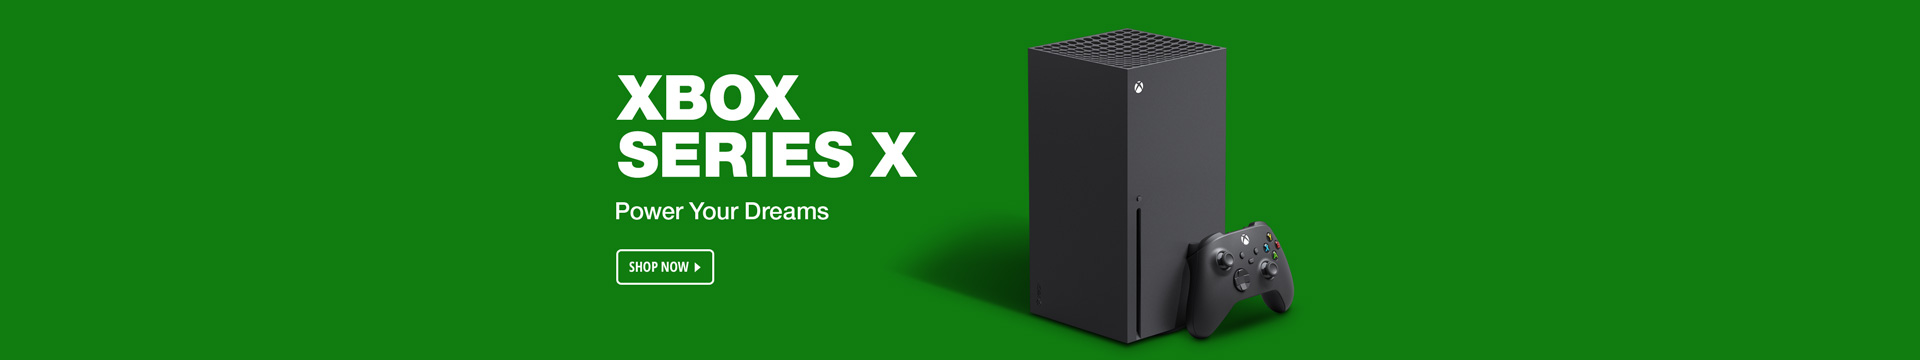 xbox series x promotion